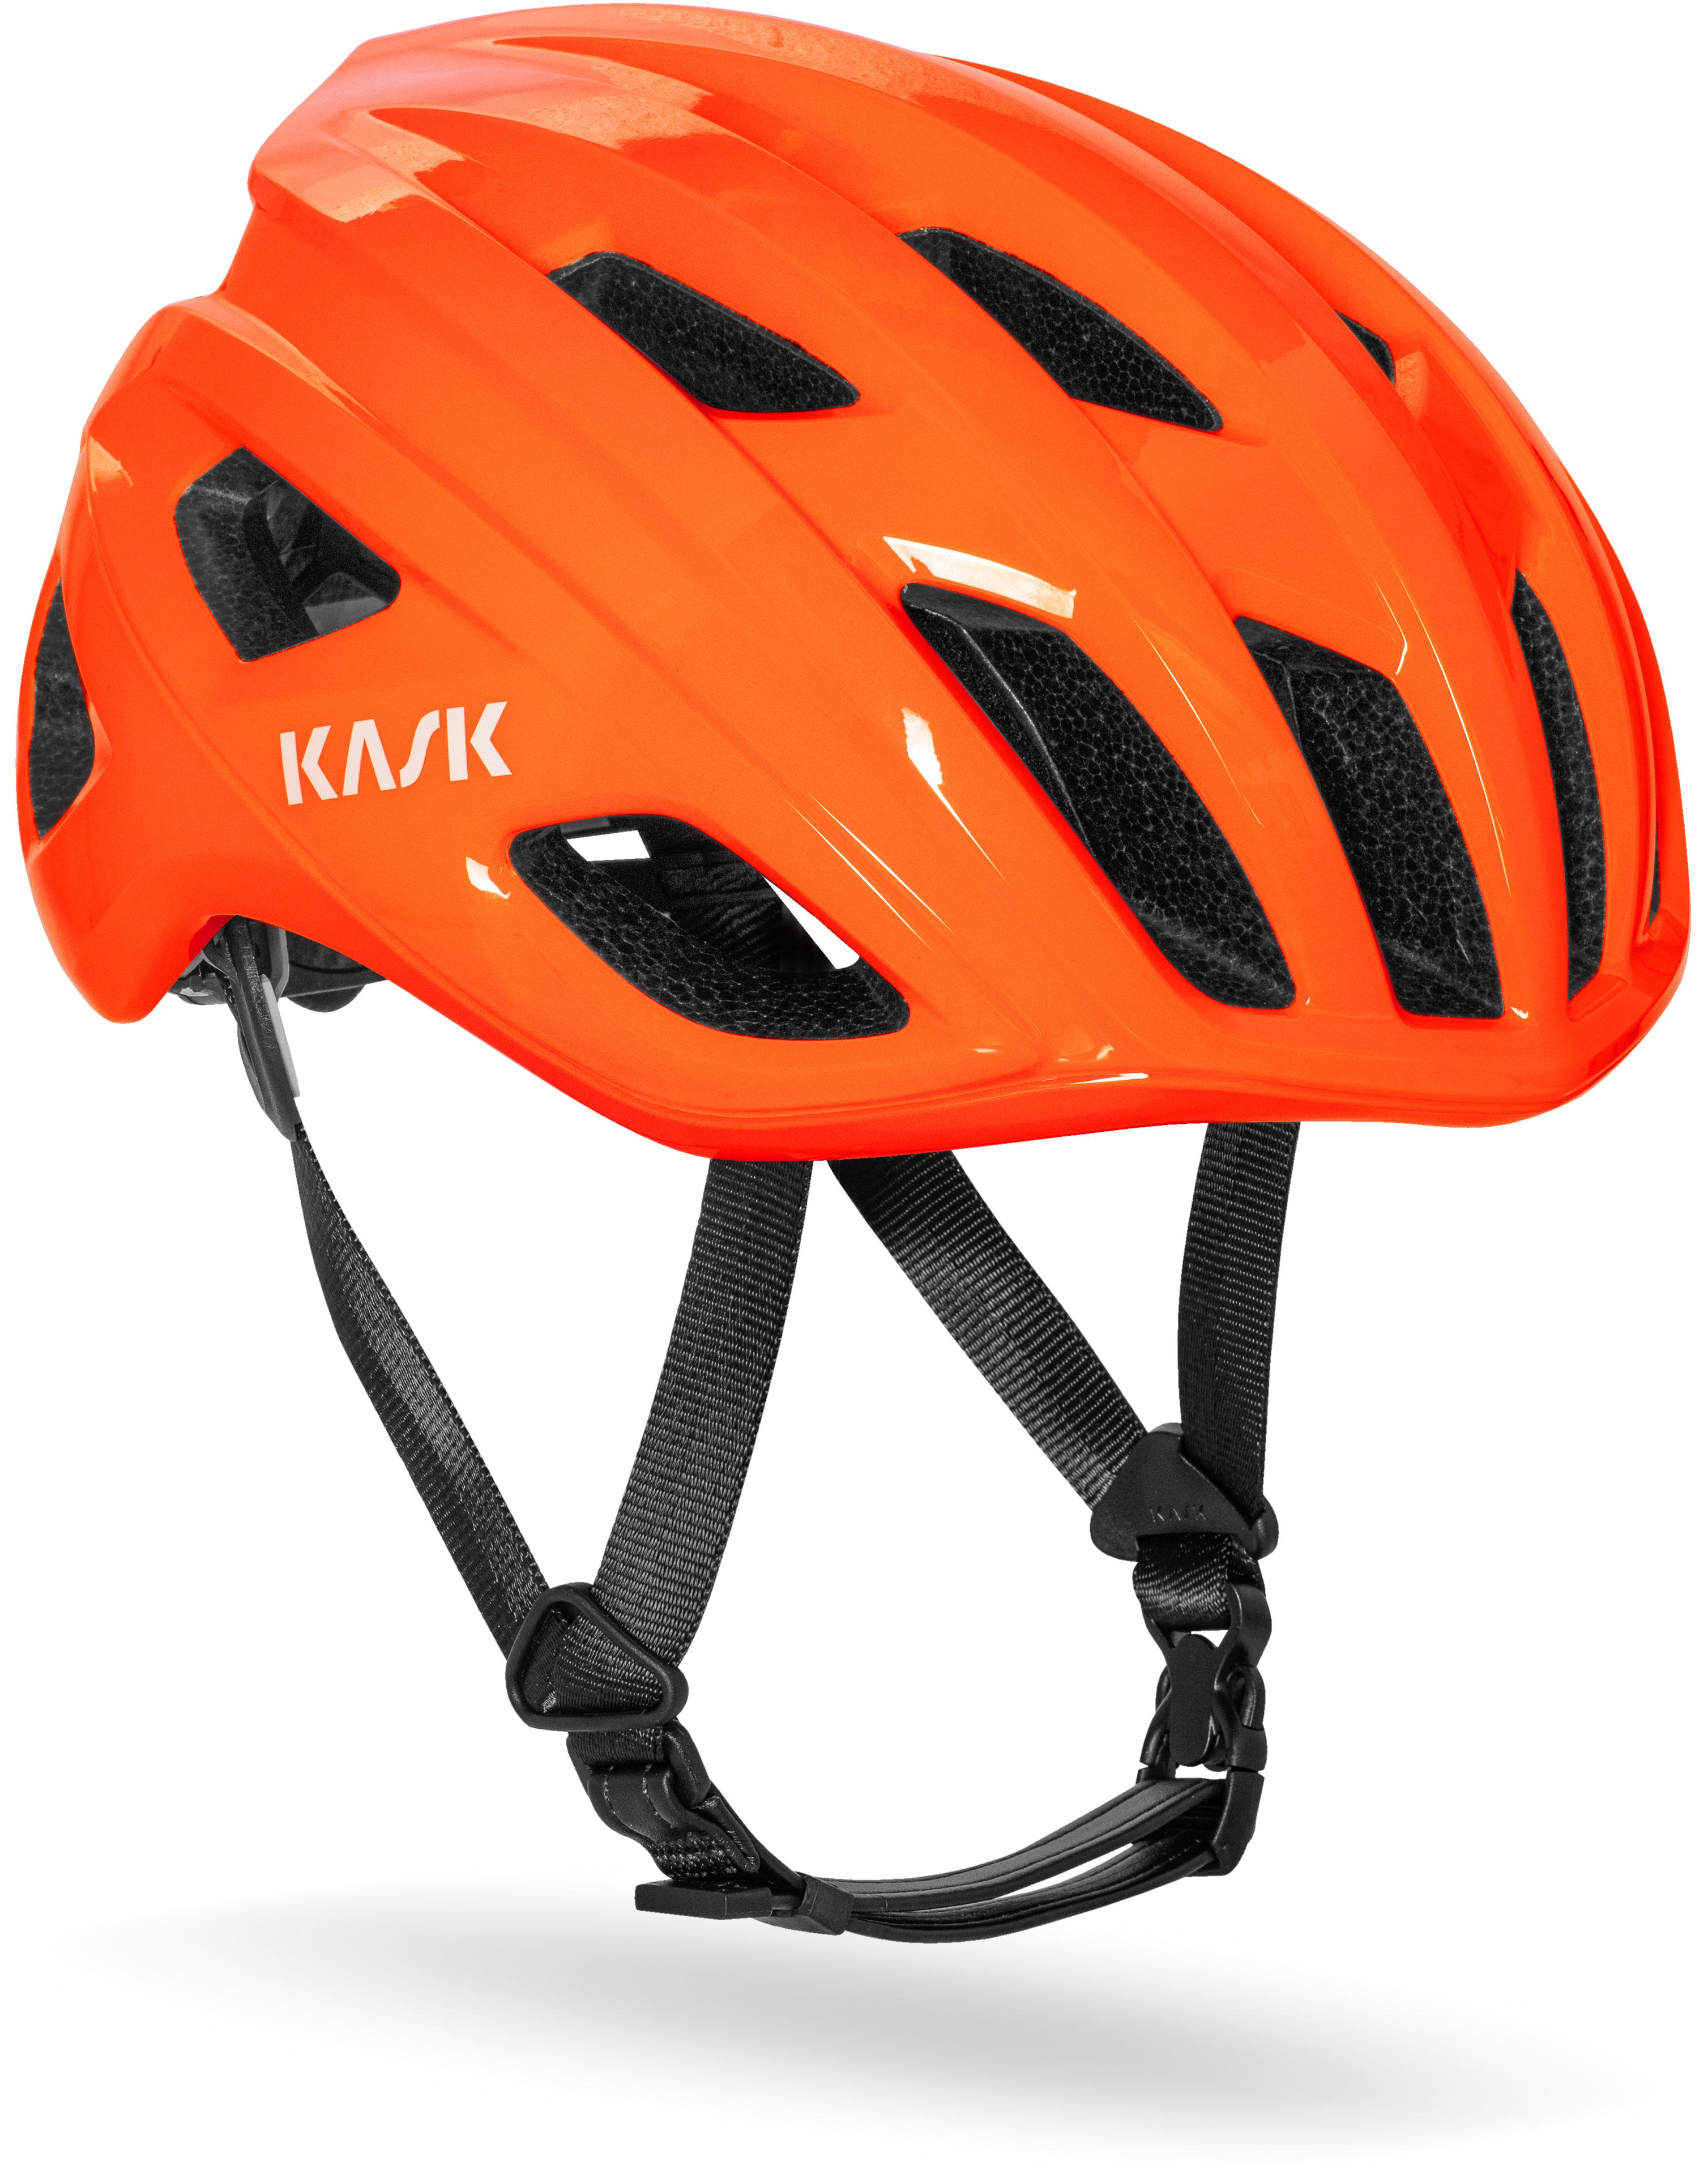 Kask Mojito Wg11 Road Helmet Orange Fluo, Medium